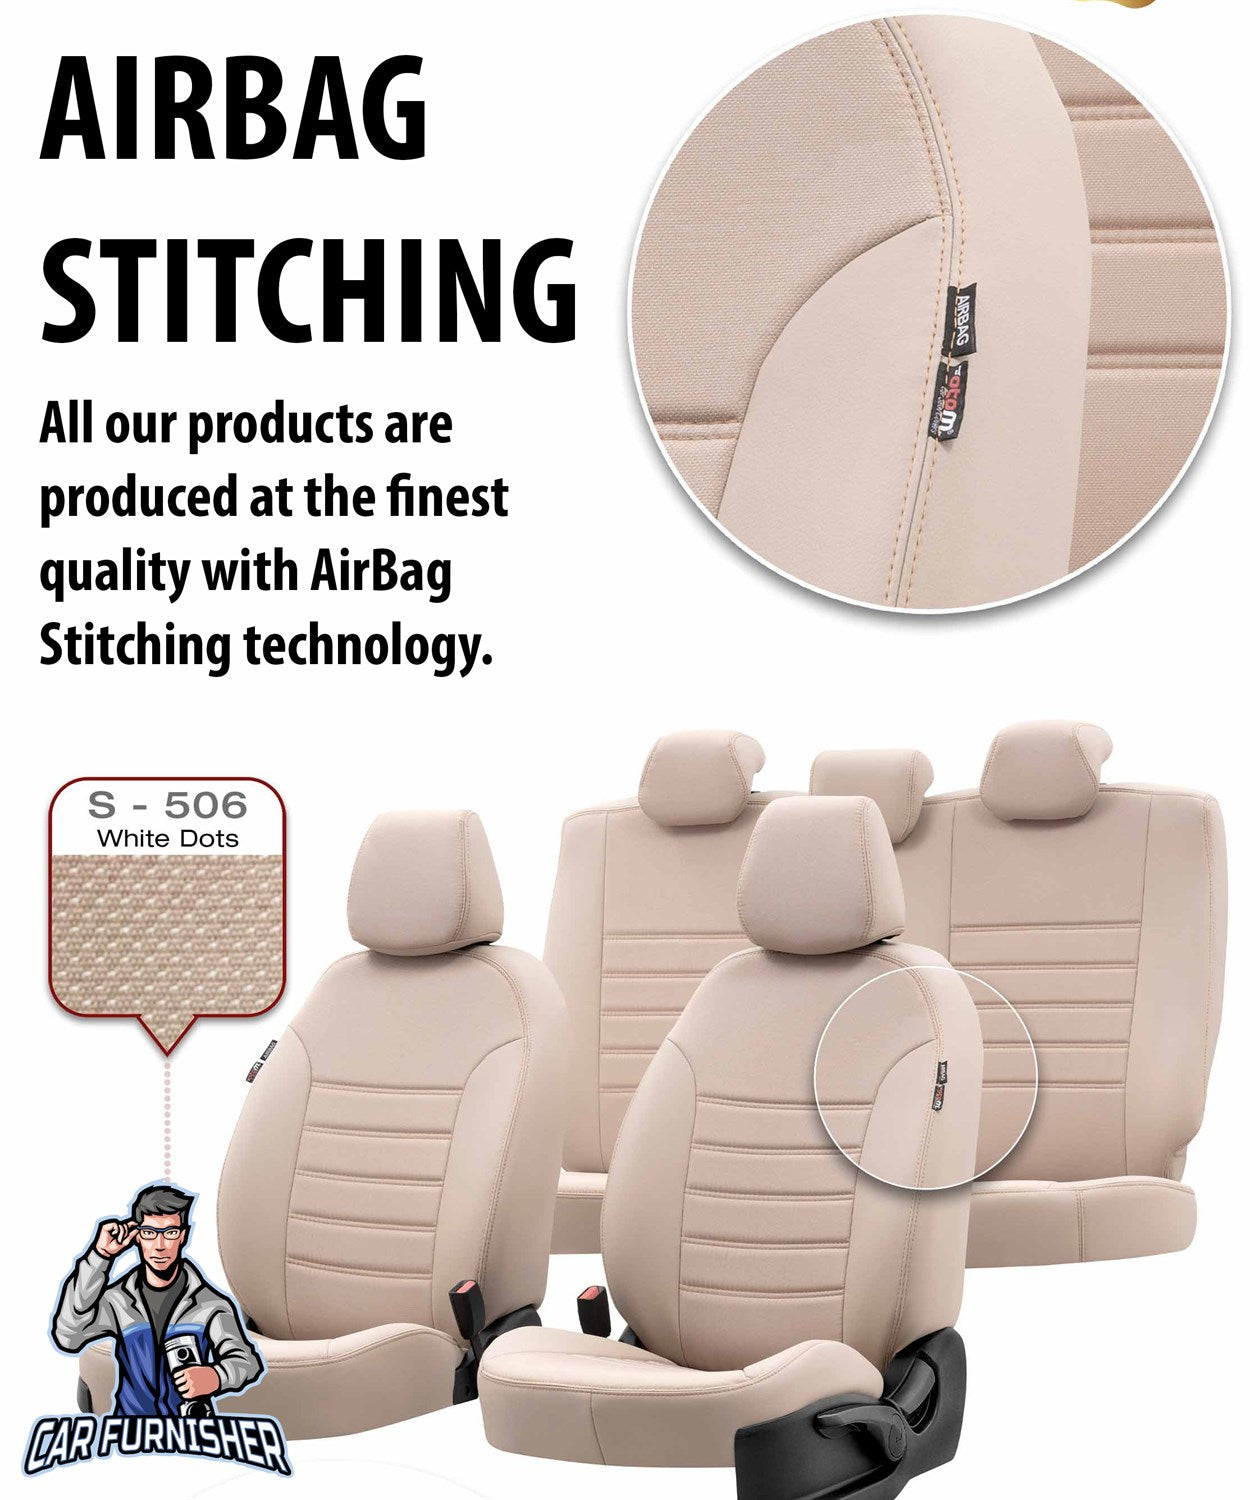 Bmw 5 Series Seat Cover Paris Leather & Jacquard Design Beige Leather & Jacquard Fabric